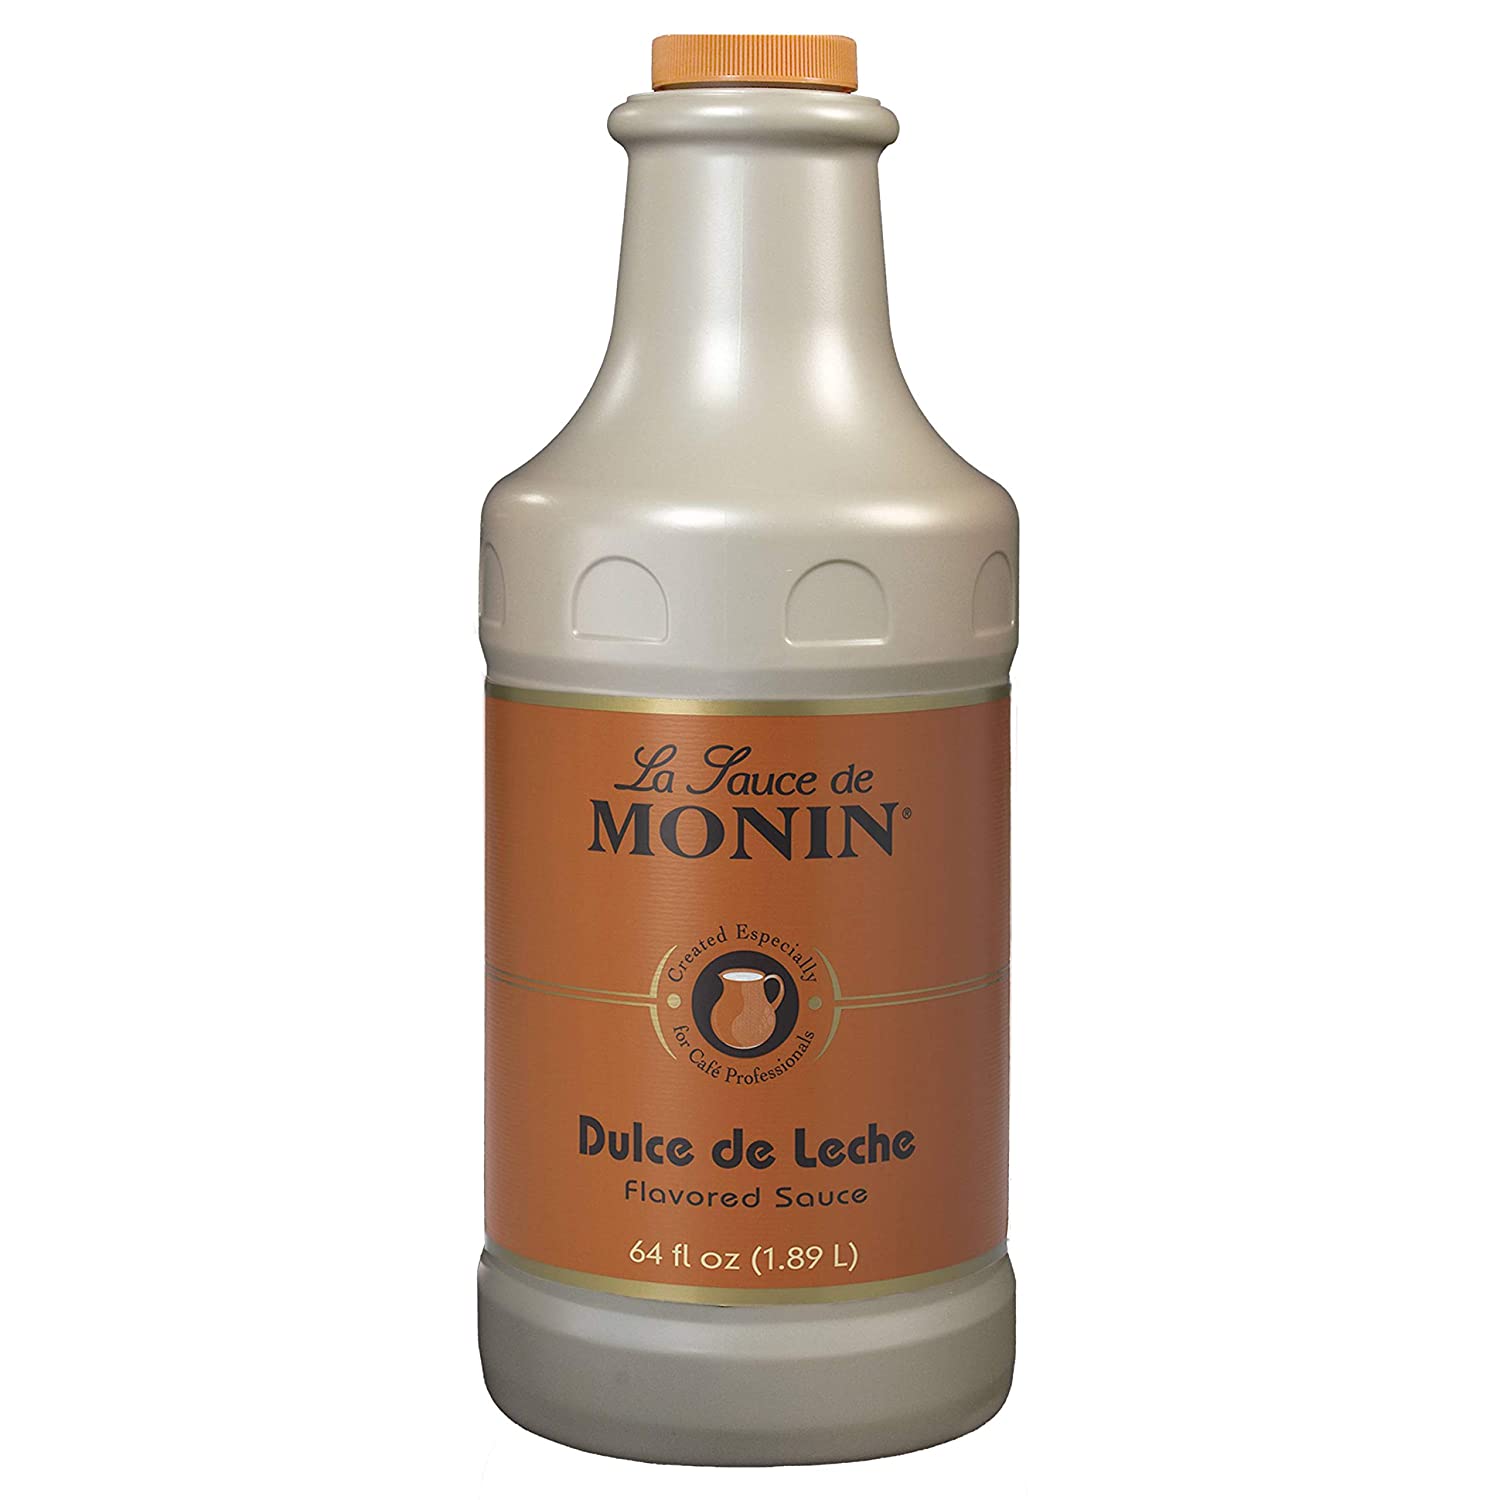 Monin Gourmet Sauce - 64 oz. Bottle: Dulce de Leche